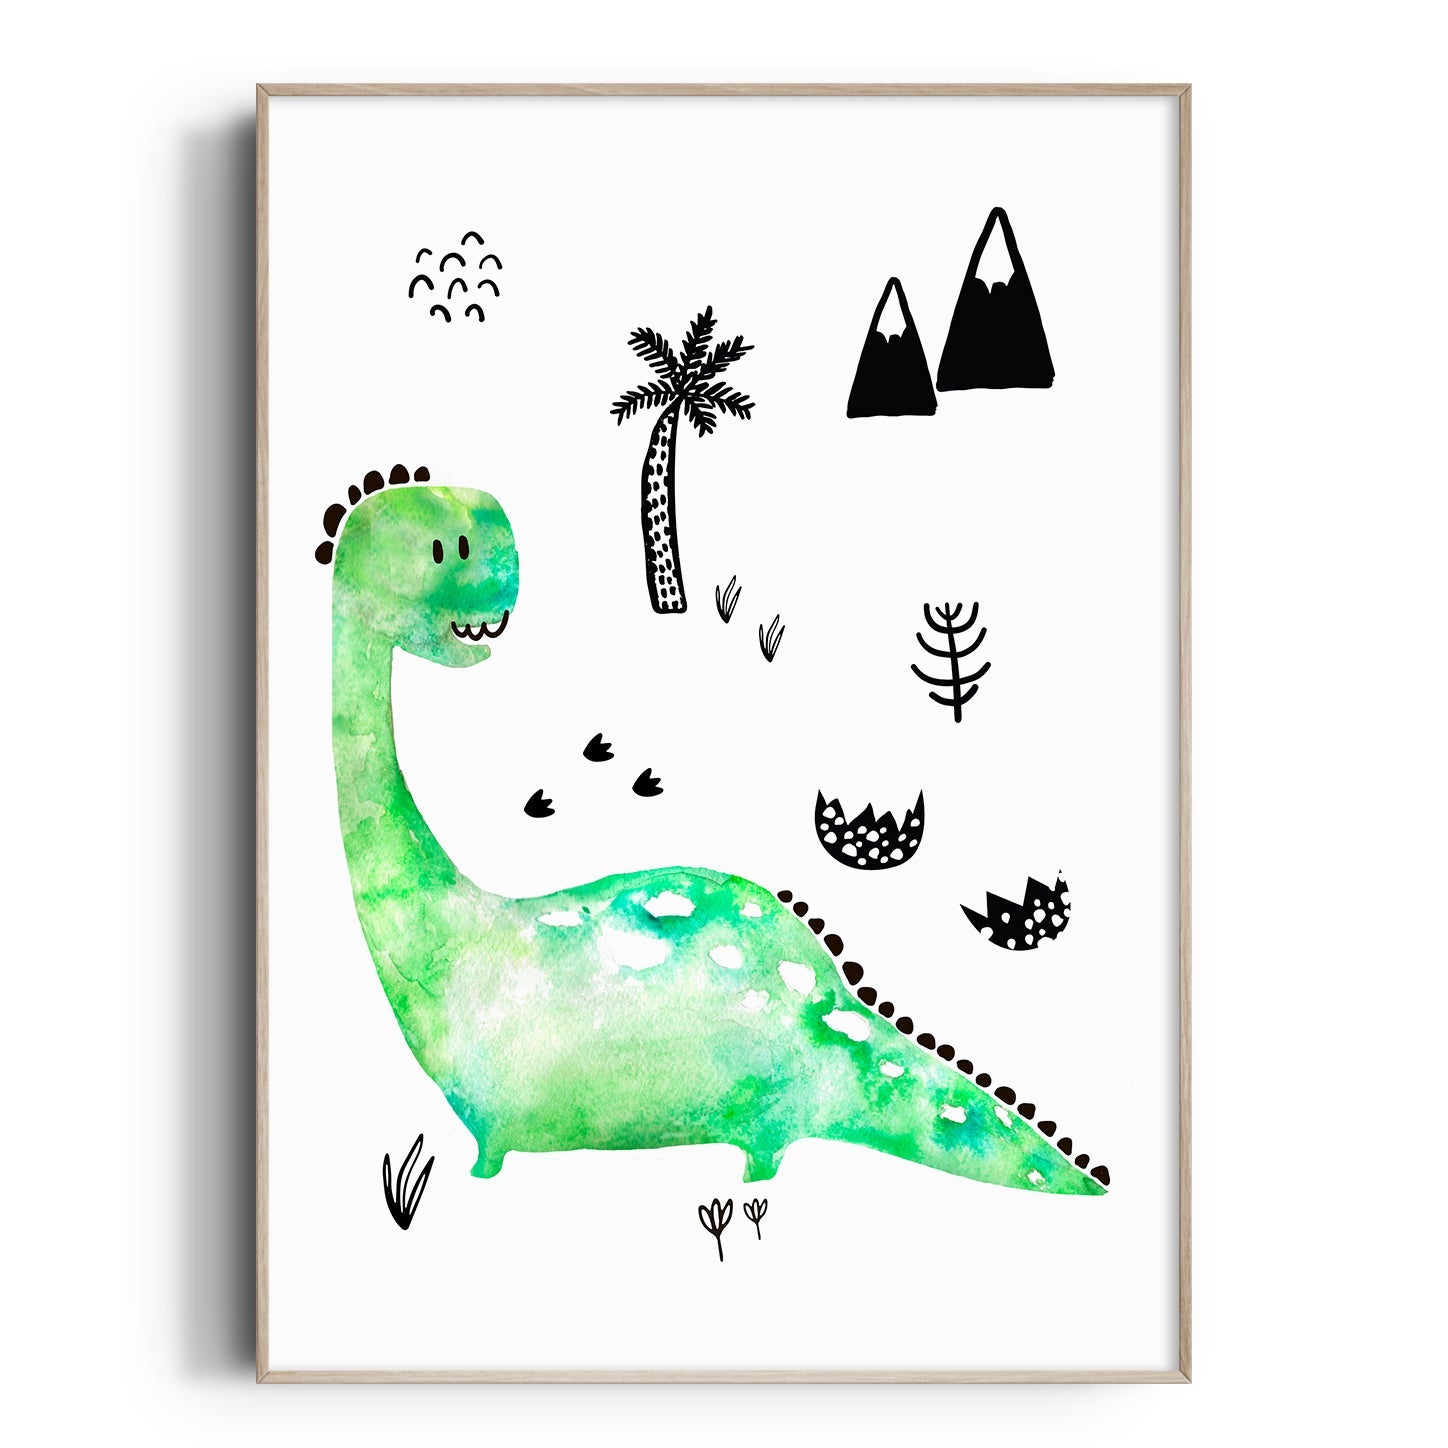 Green Dinosaur Print